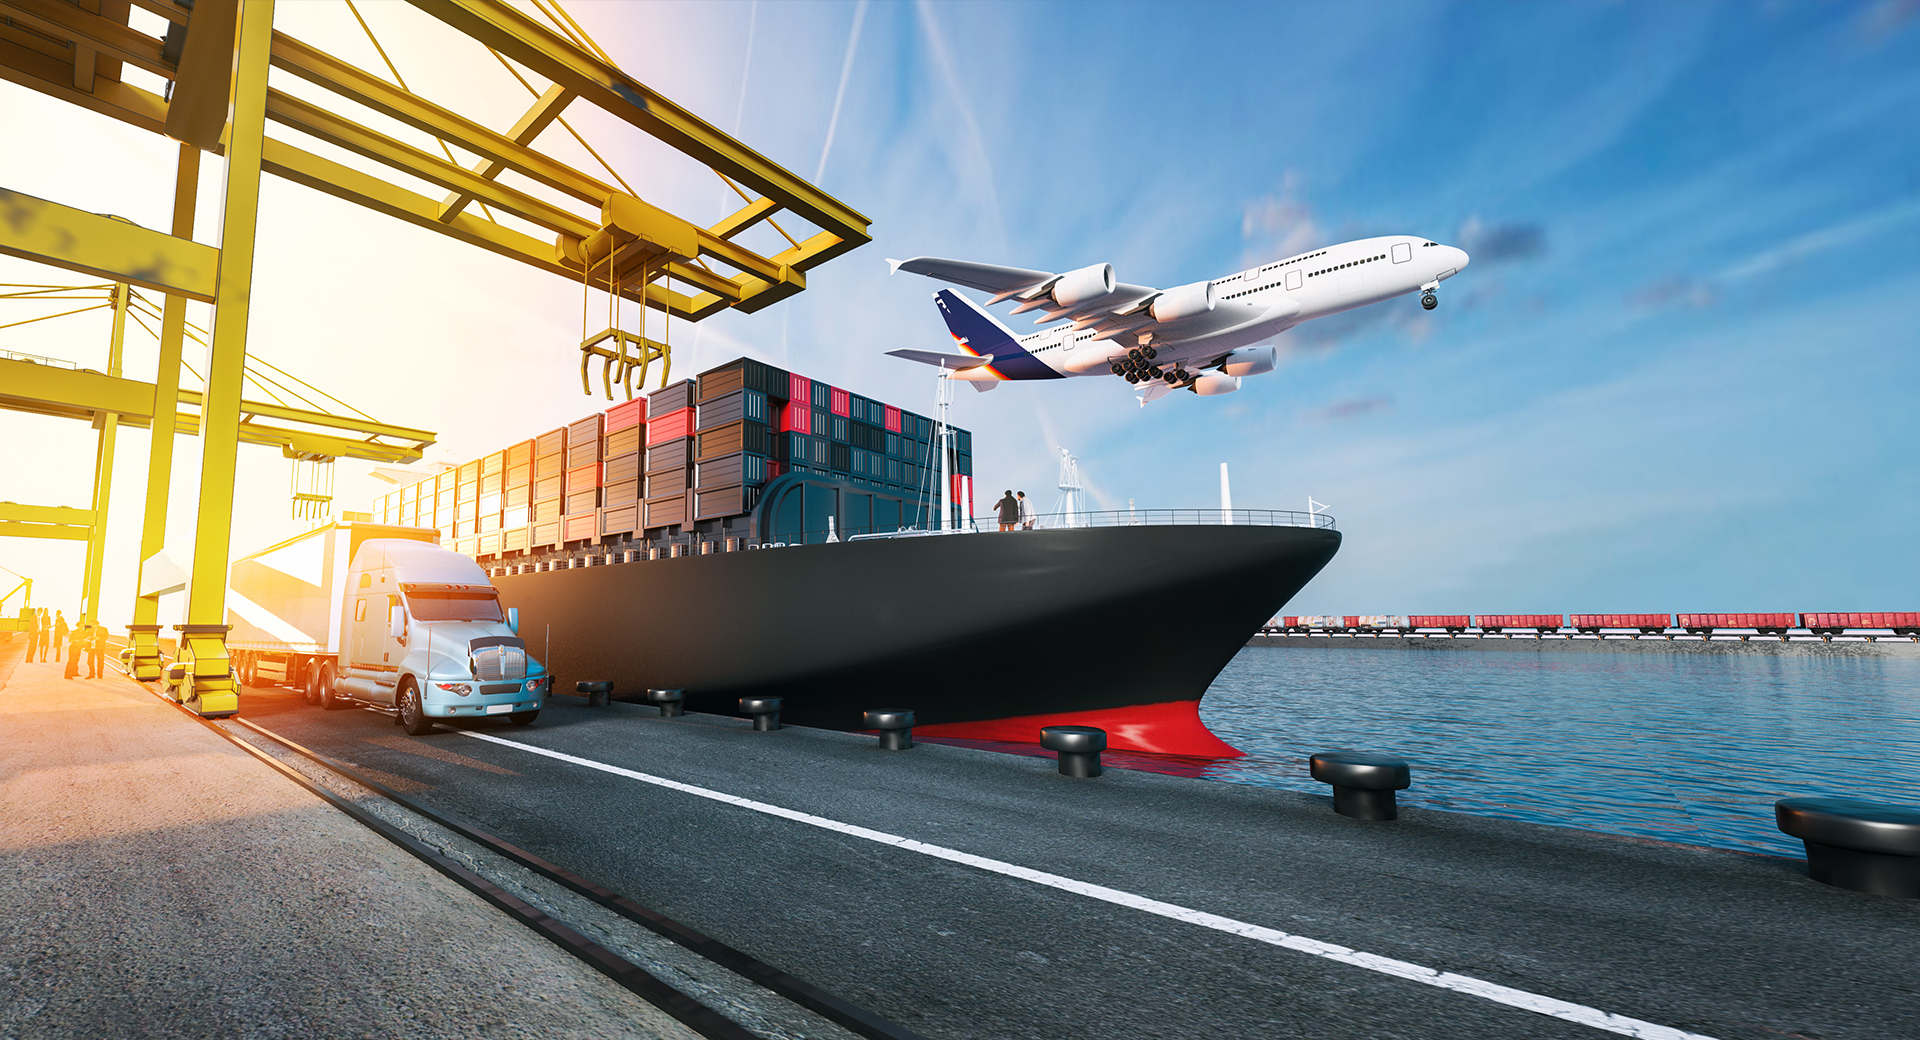 logistics transportation, including semi truck, docked cargo ship and airplane